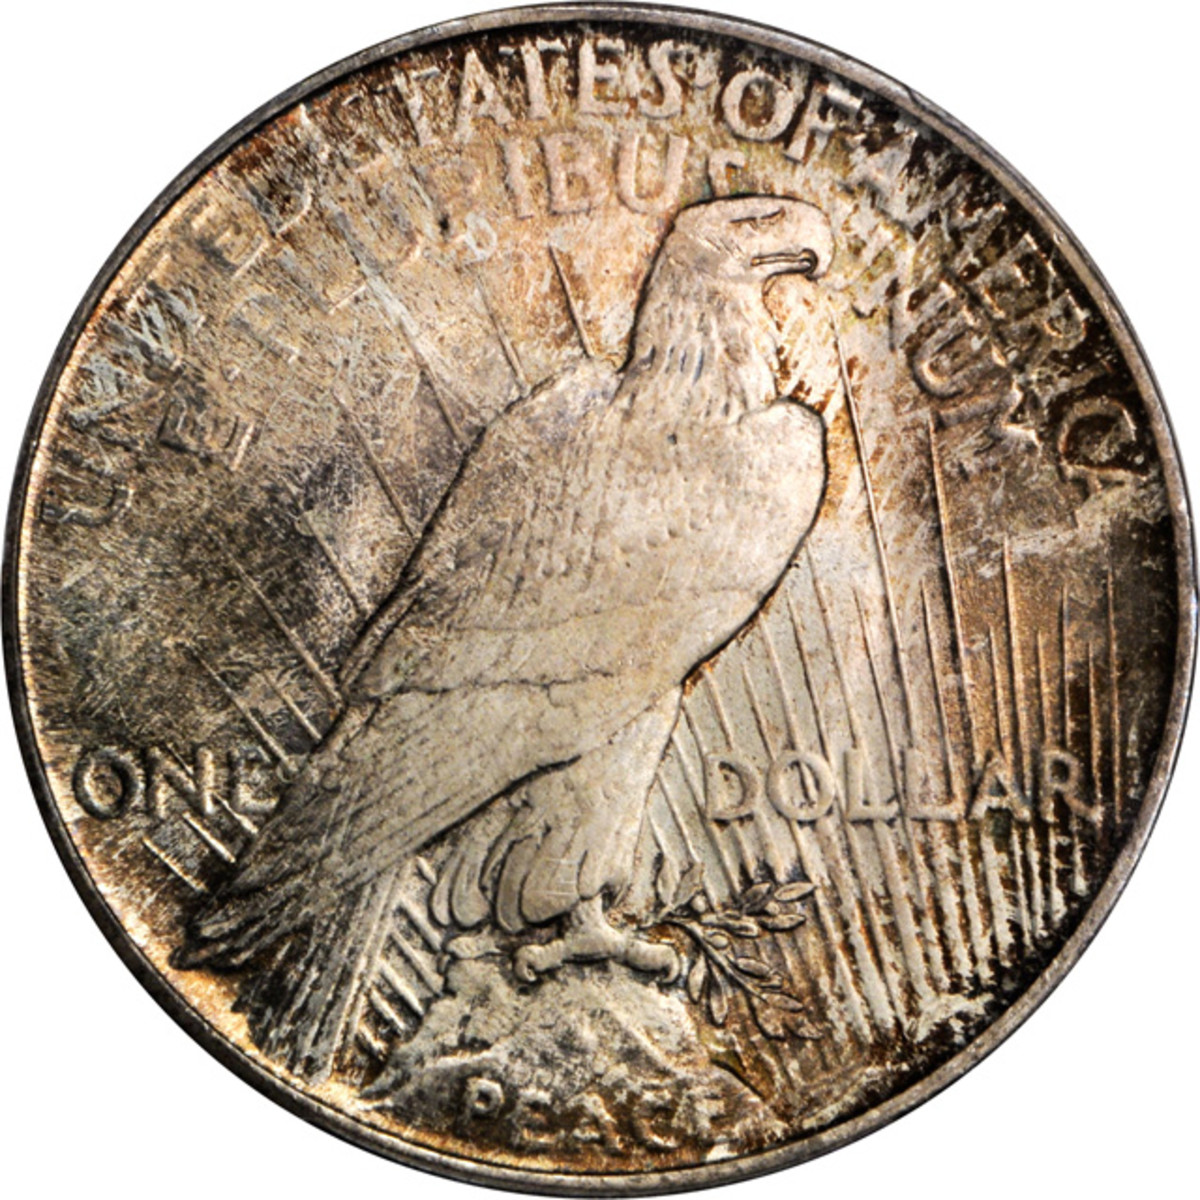 Lot 13169. 1922 Peace silver dollar. Early hub dies. PCGS MS-67). Ex: Raymond T. Baker Estate.